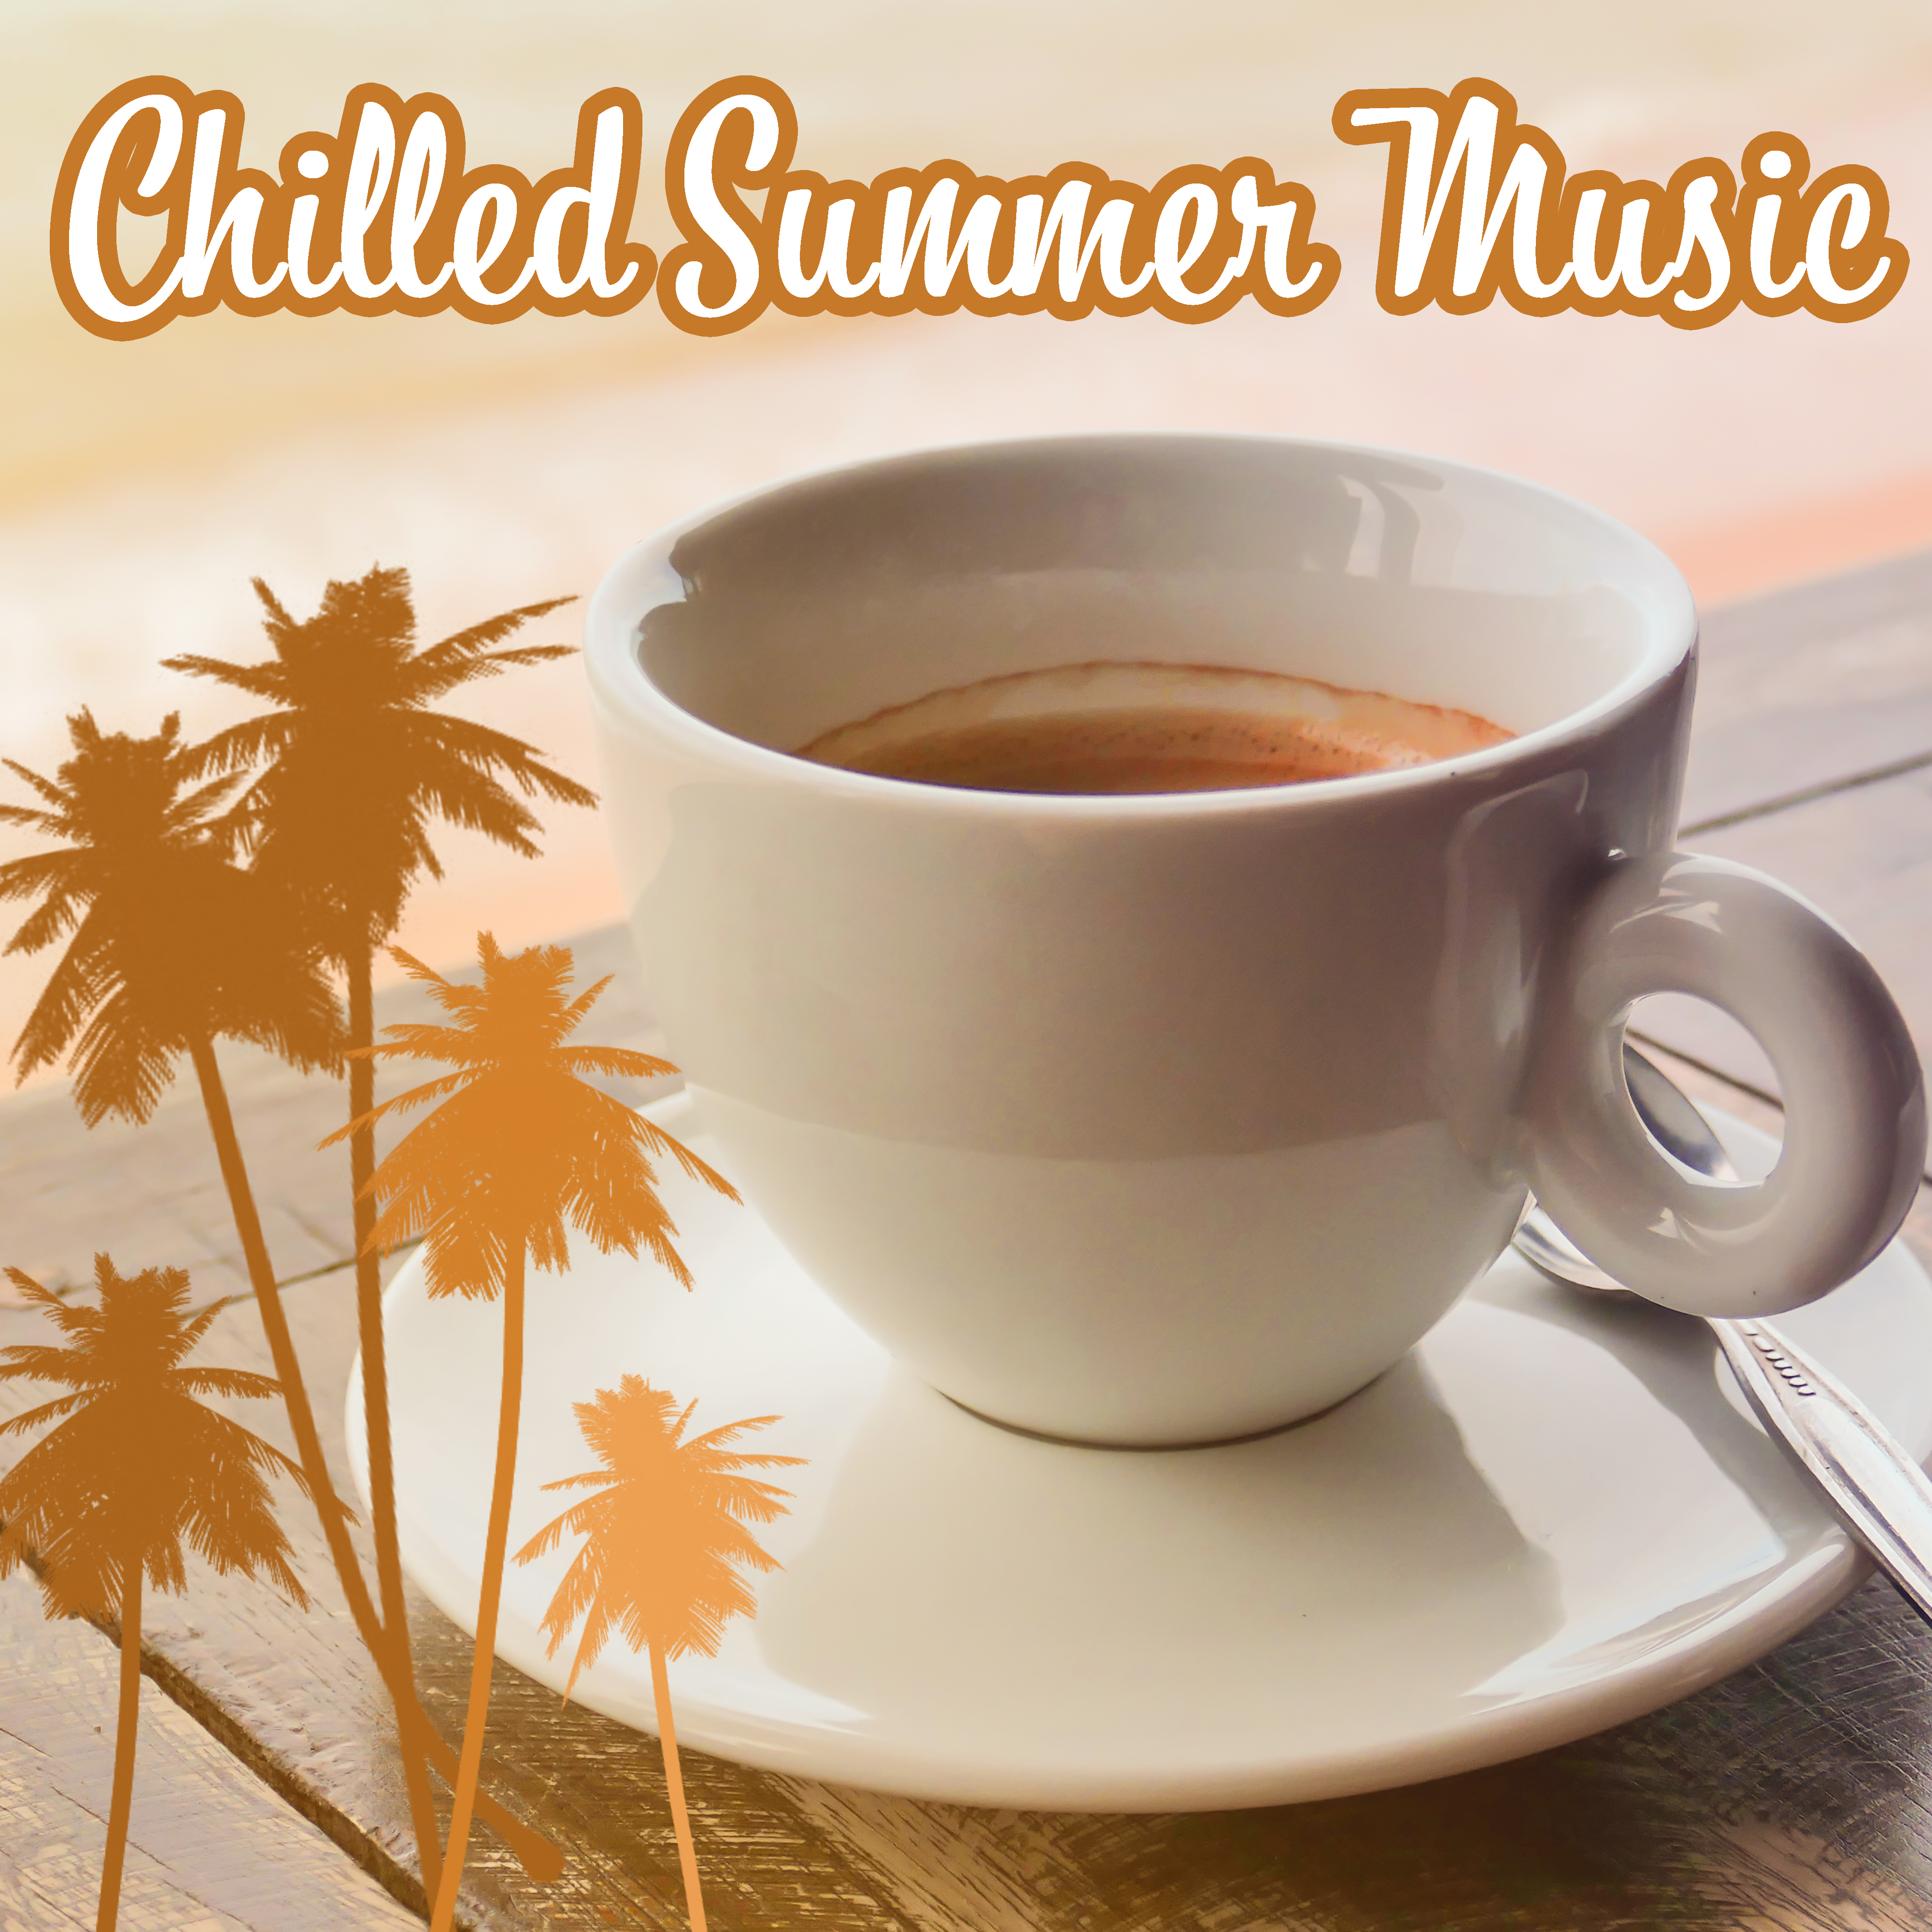 Chilled Summer Music  Easy Listening, Stress Relief, Beach Summer Music, Calming  Peaceful Sounds